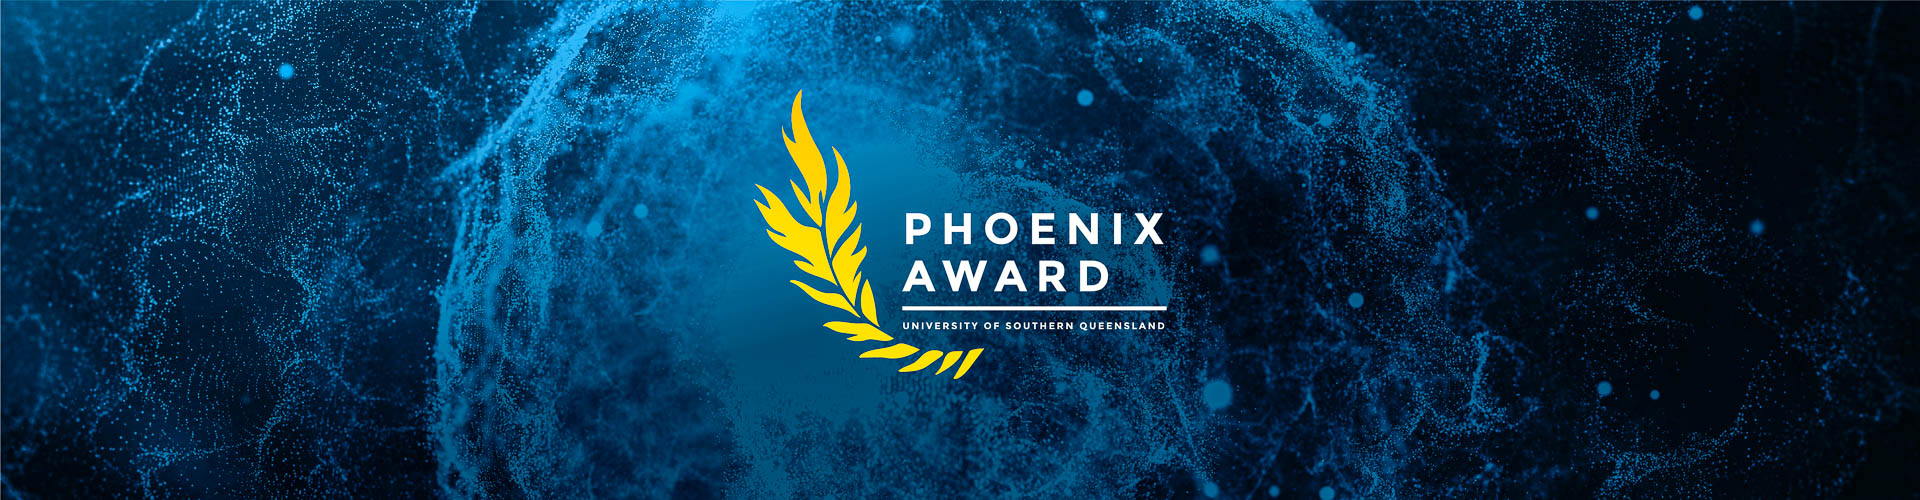 Phoenix Award, University of Southern Queensland